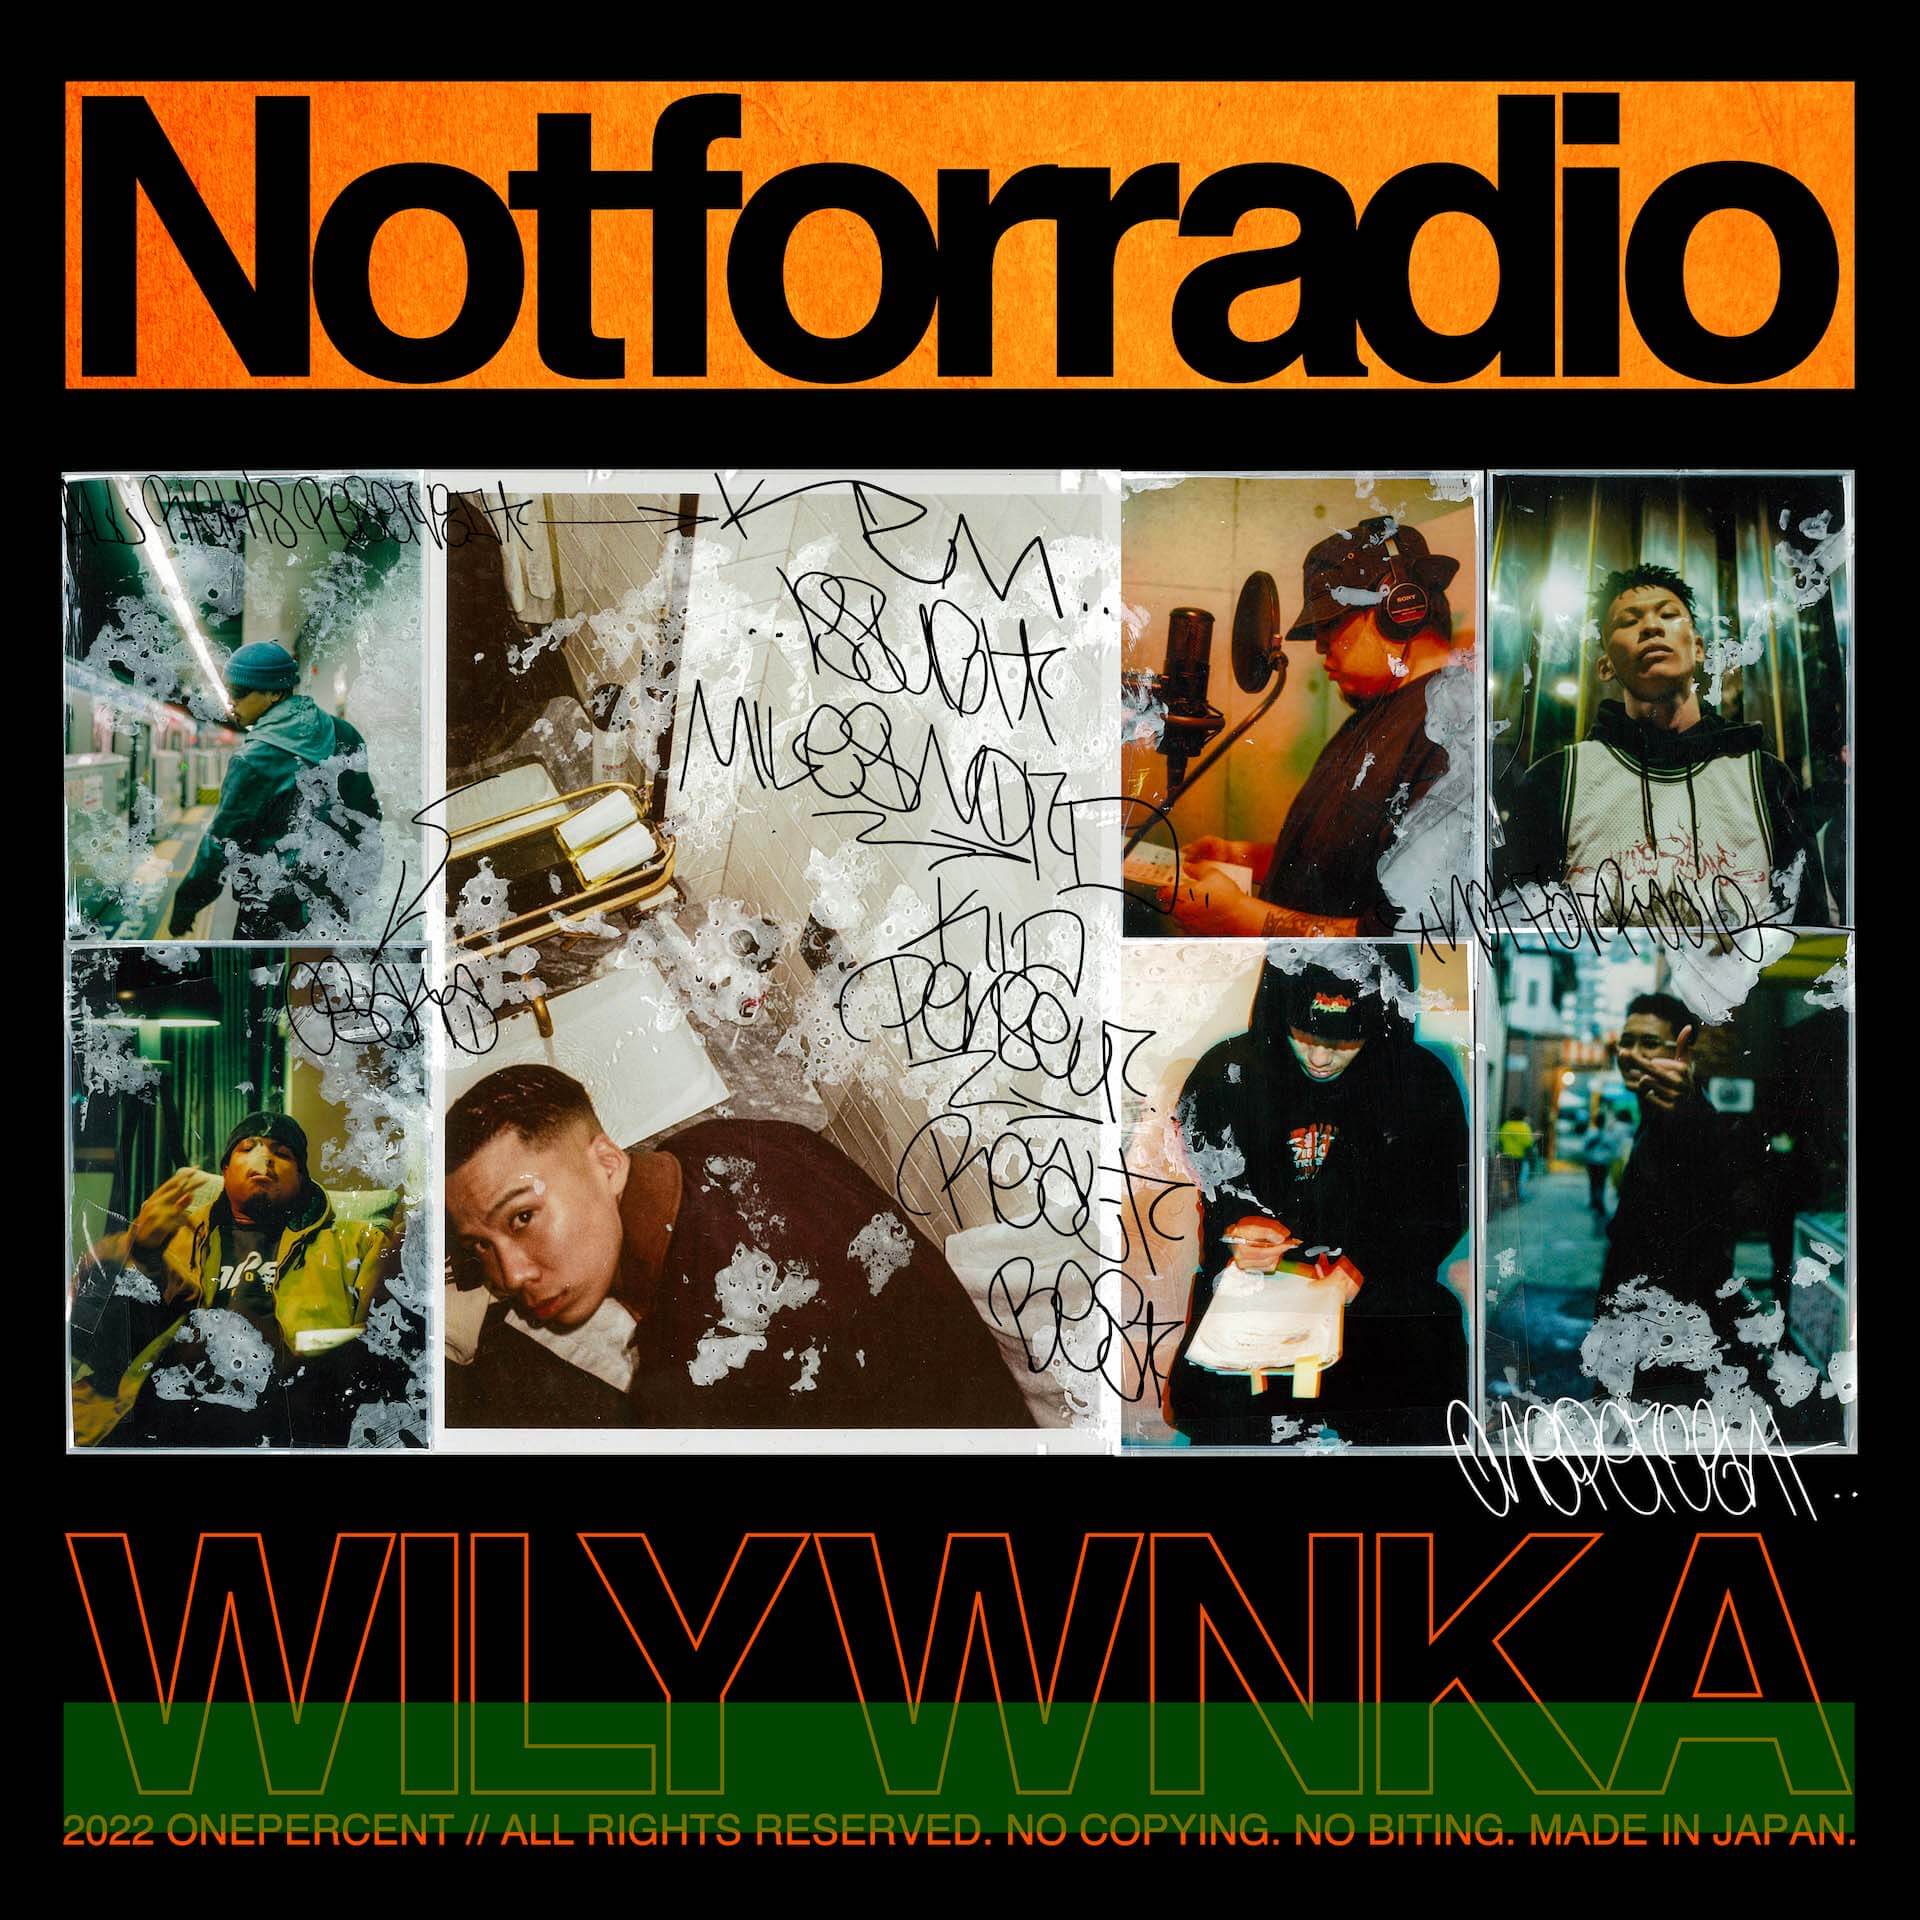 WILYWNKAが新作EP 『NOT FOR RADIO』を配信リリース！KID PENSEUR、BES、REAL-T、kZm、MILES WORD、ISSUGIが客演参加 music_220113_wilywnka_01